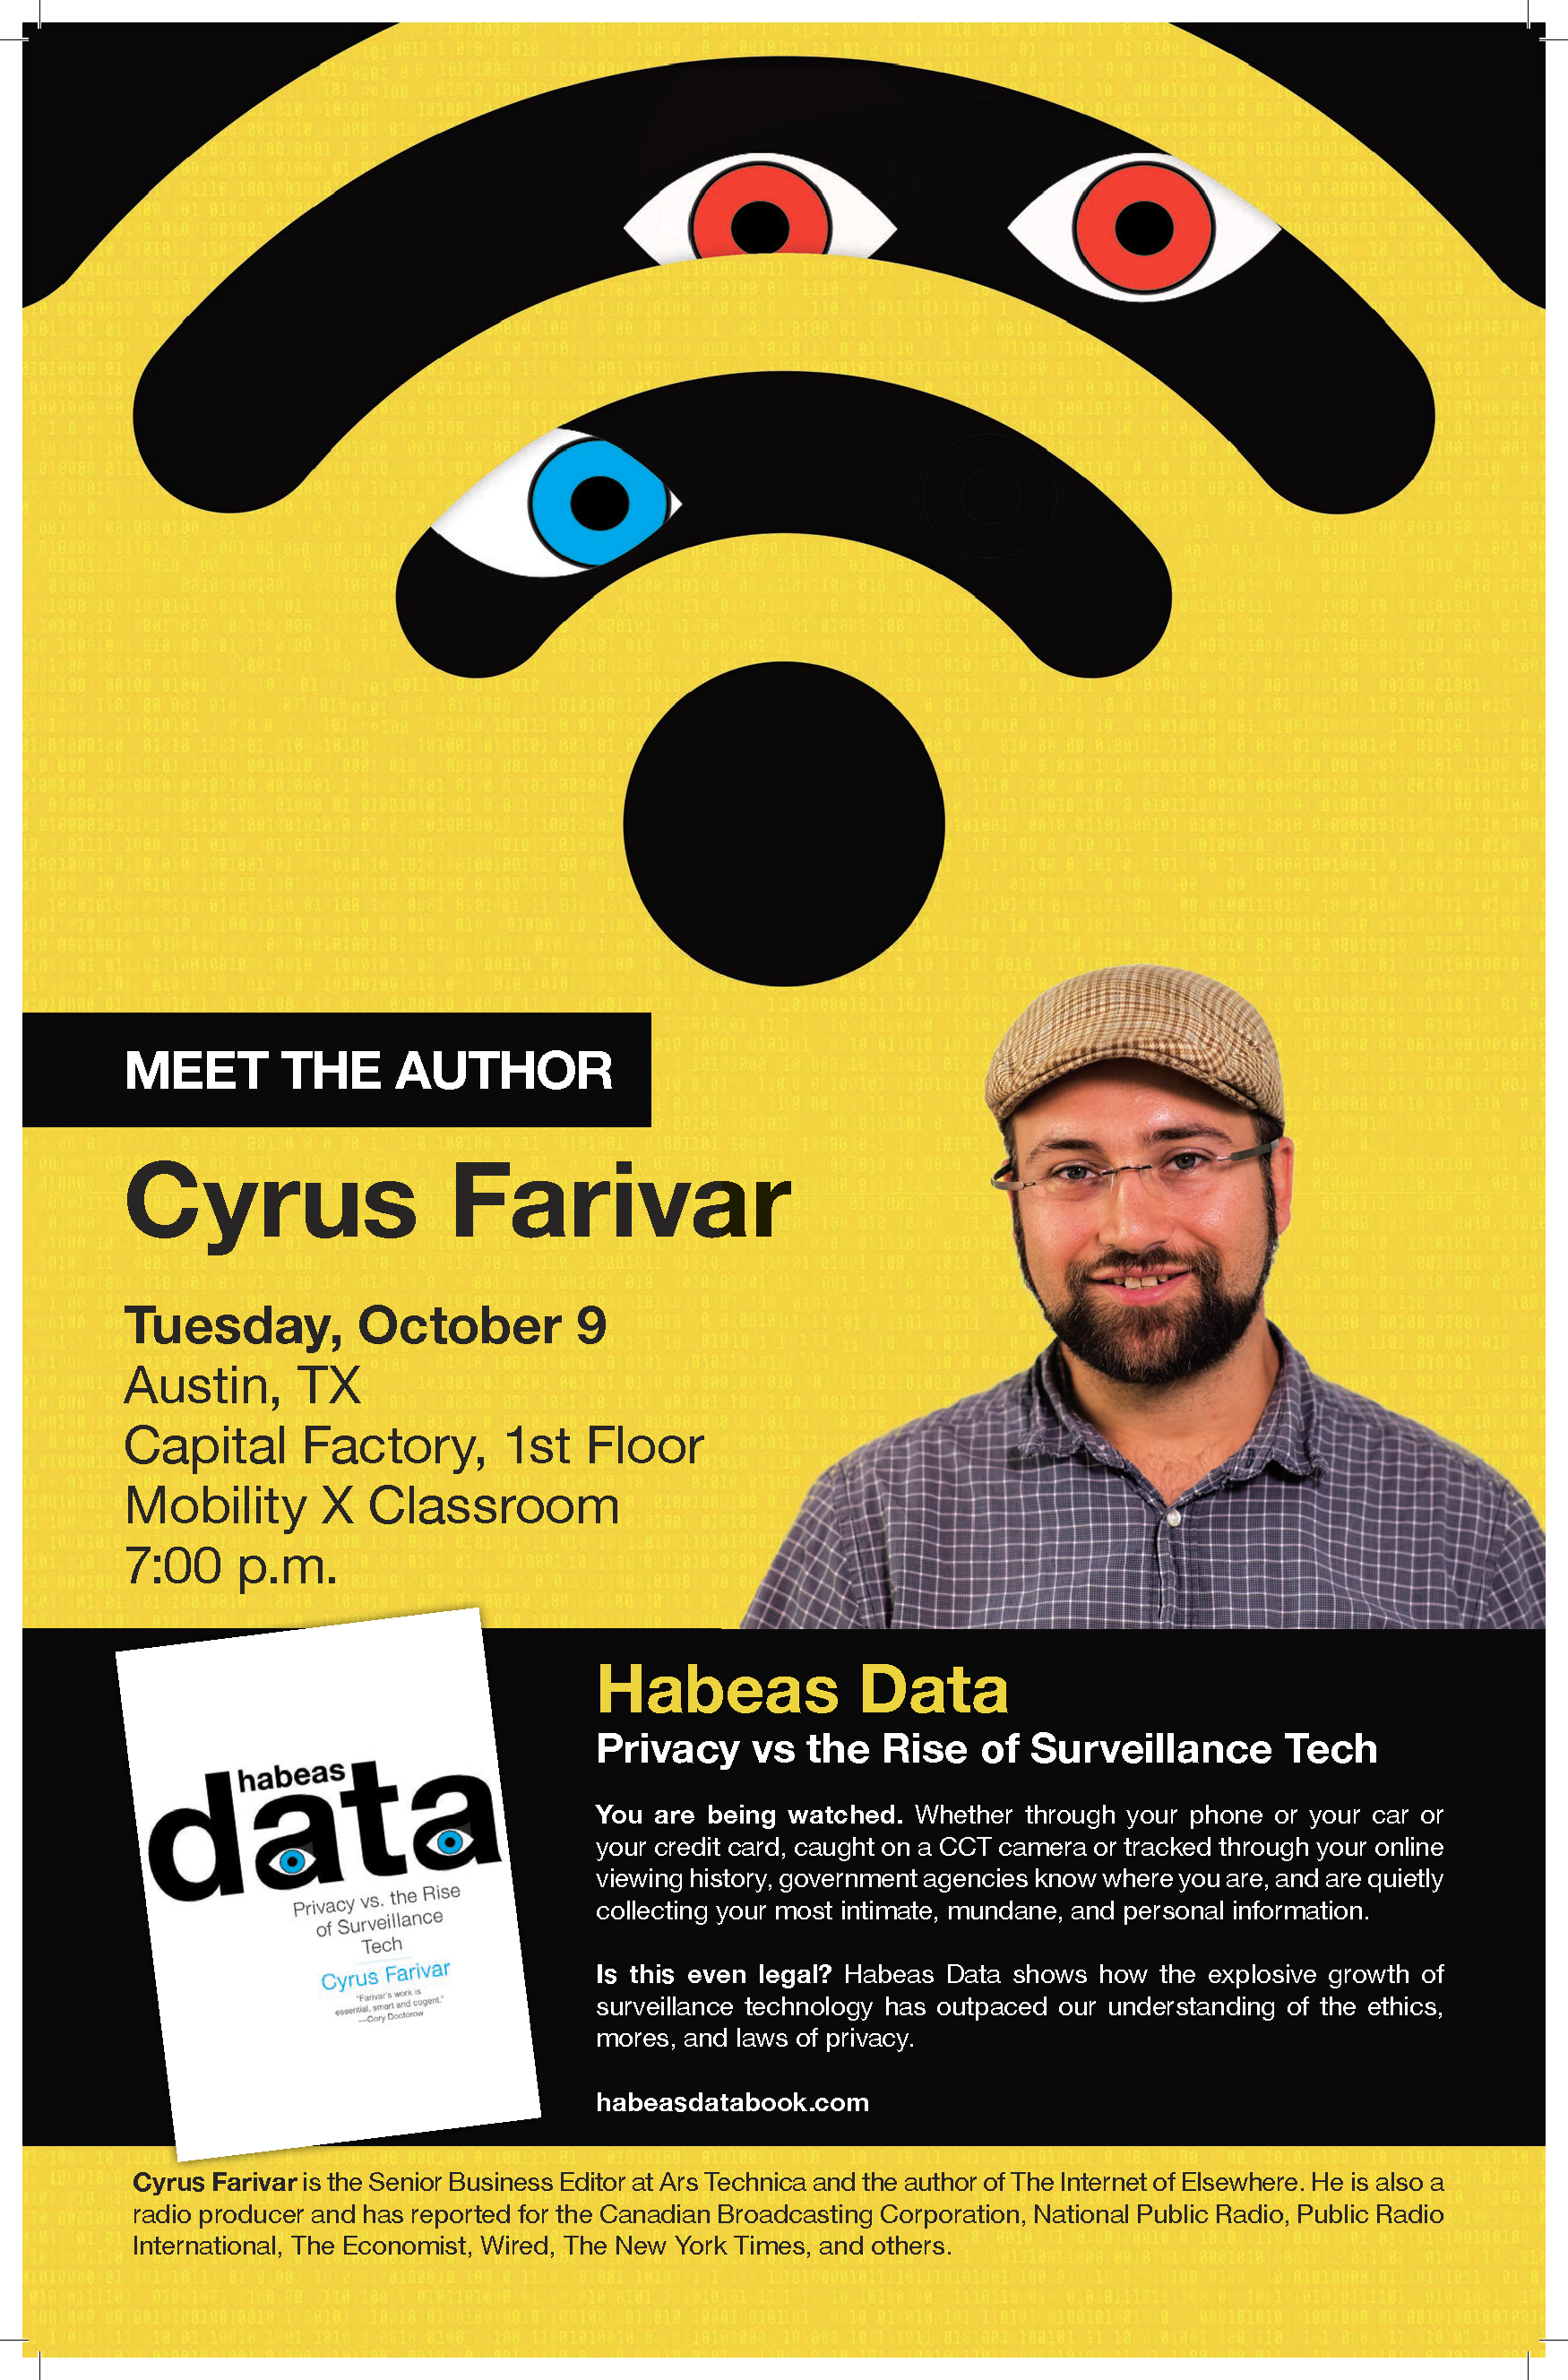 Habeas Data Book Signing With Cyrus Farivar!